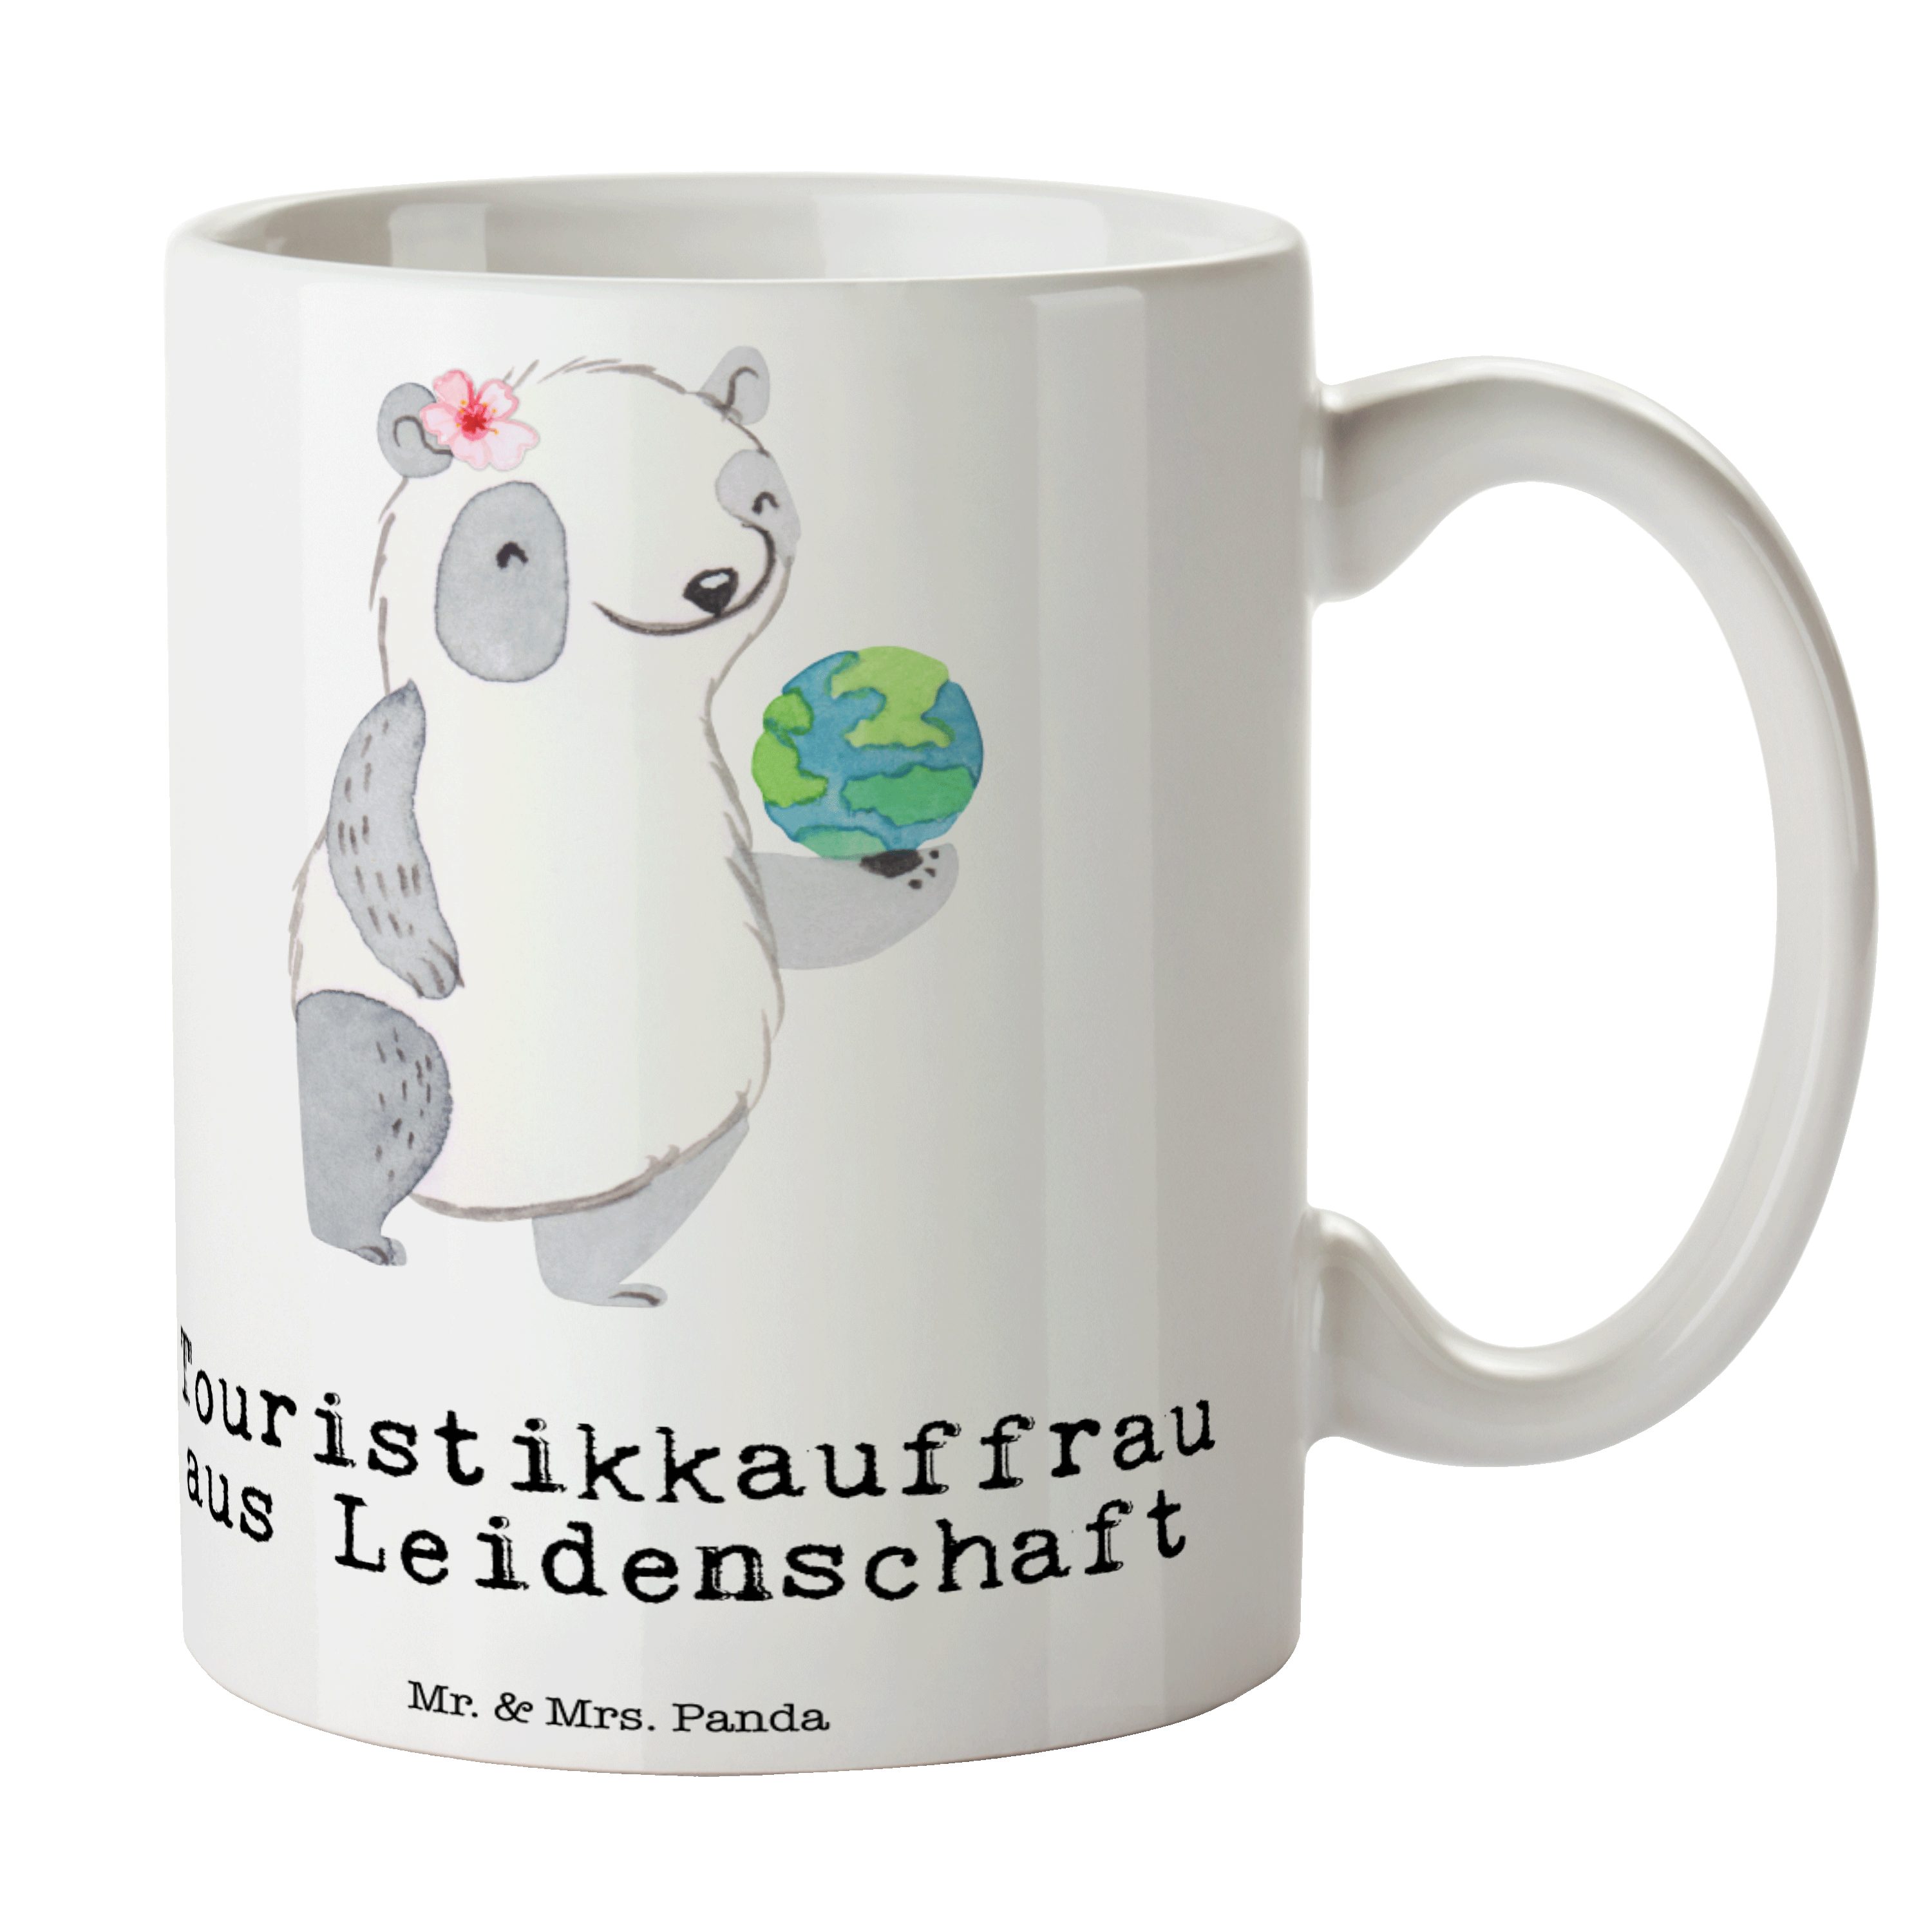 Mr. & - Leidenschaft Kaffe, Tasse Weiß - Geschenk, Panda Mrs. Touristikkauffrau Keramik aus Teetasse